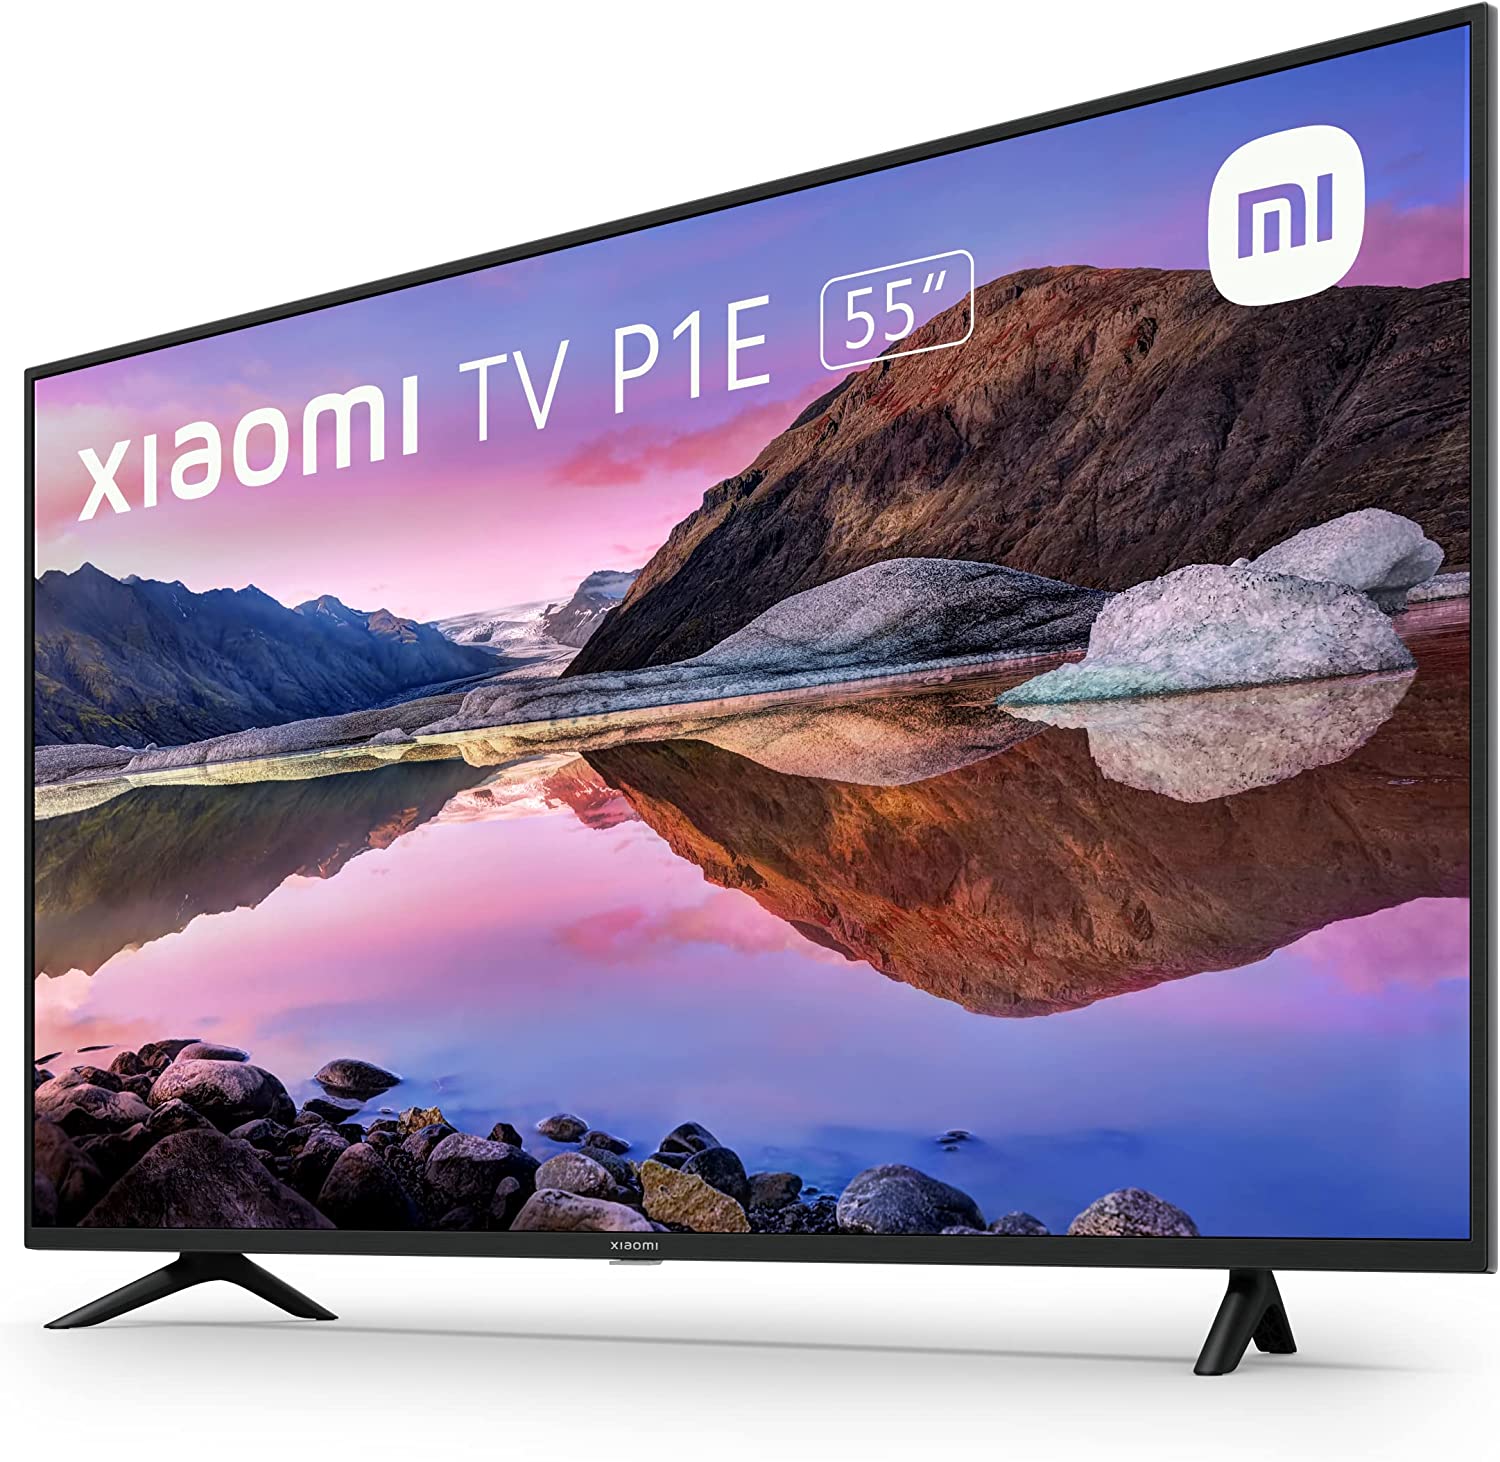 Xiaomi Mi TV P1E Smart TV 55" LED Ultra HD 4K HDR10 - WiFi, HDMI, USB 2.0, Bluetooth - Angle de vision : 178° - VESA 300x300mm